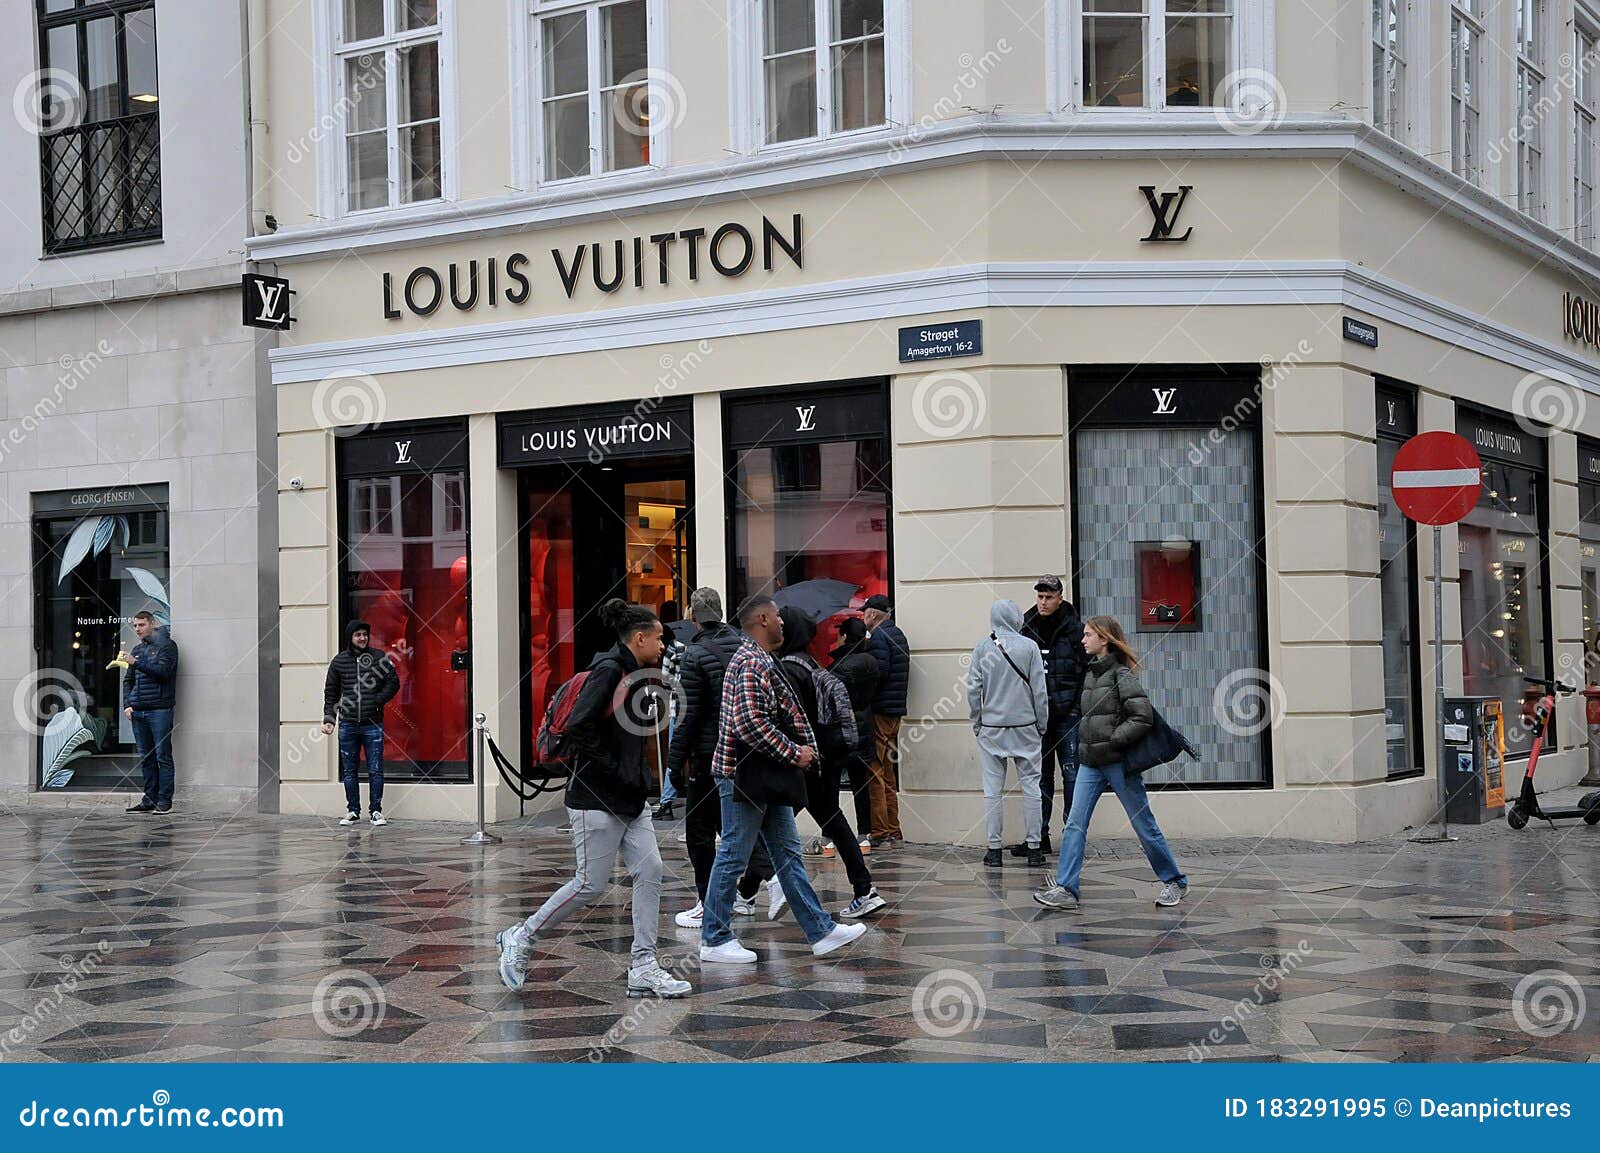 Bolt Drastisk Uafhængig Consumer Standing in Line Infront Louis Vuitton Store in Copenhagen  Editorial Image - Image of land, distancing: 183291995